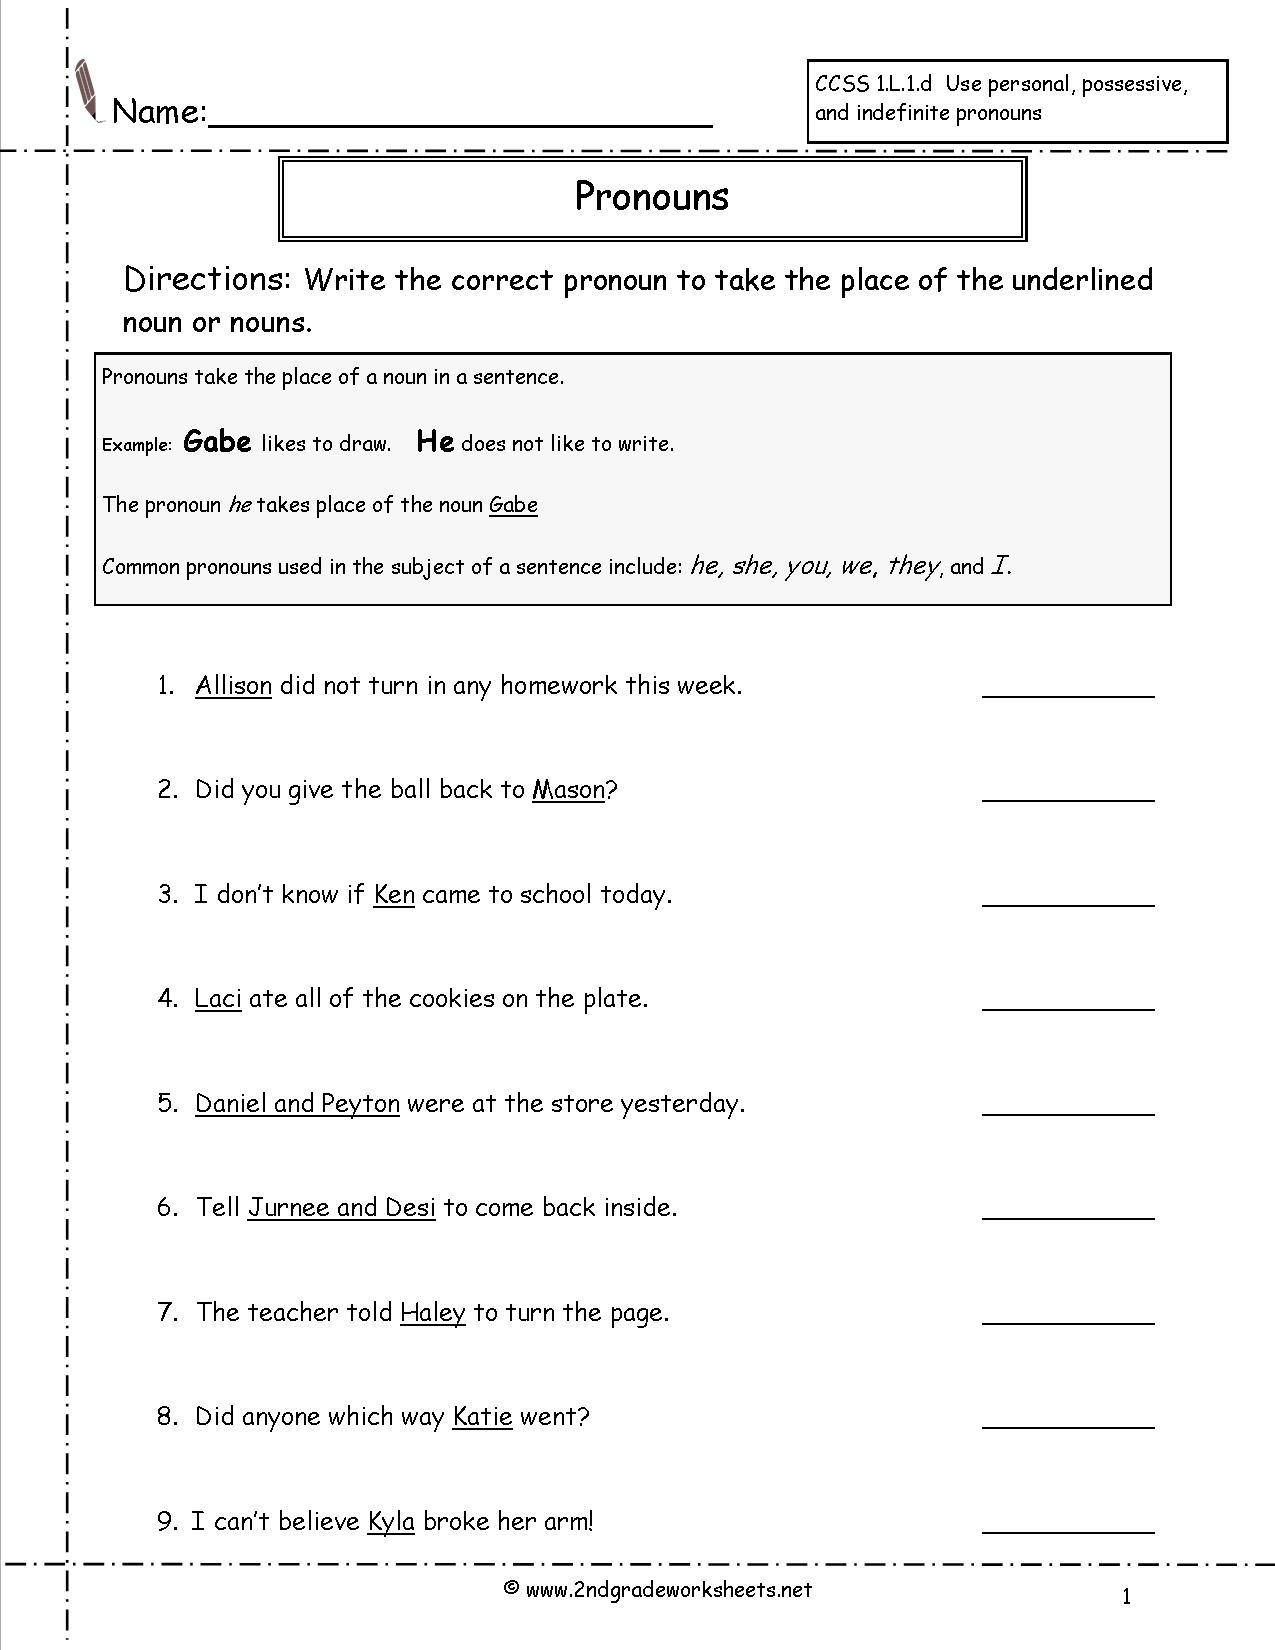 Pronoun Worksheets for 2nd Grade Pronoun Worksheets 2nd Grade